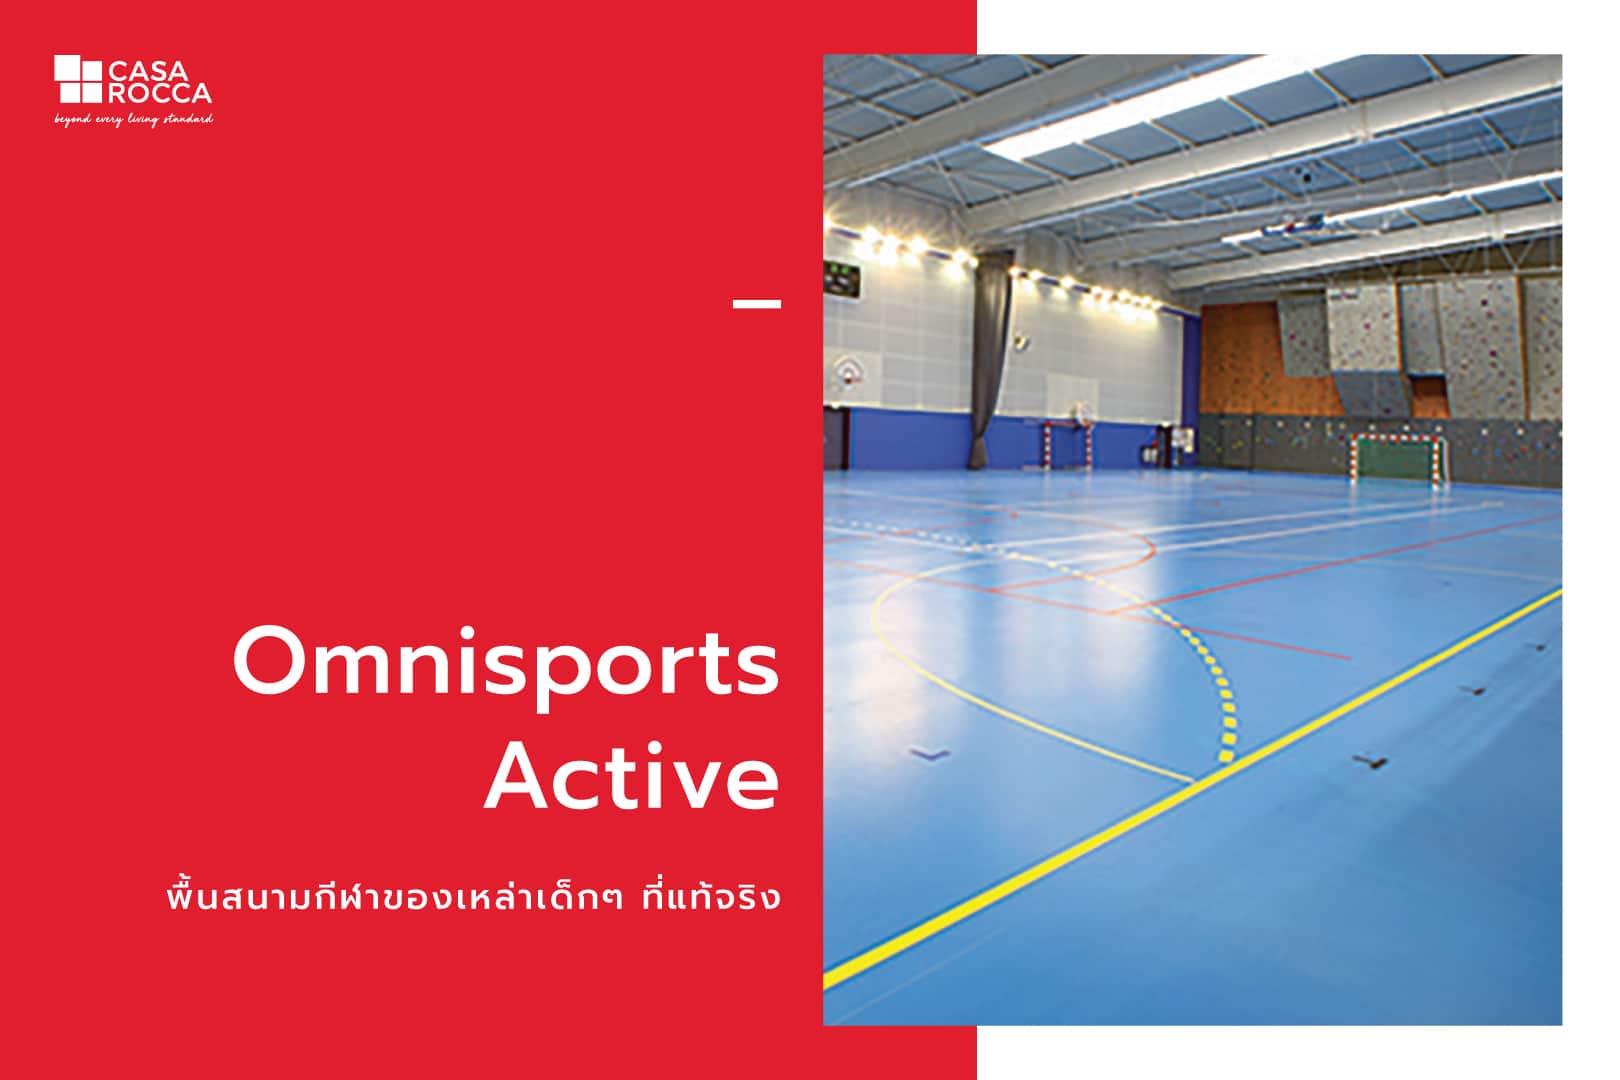 Omnisports Active พื้นกีฬา พื้นสนามกีฬา พื้นสนามกีฬาในร่ม